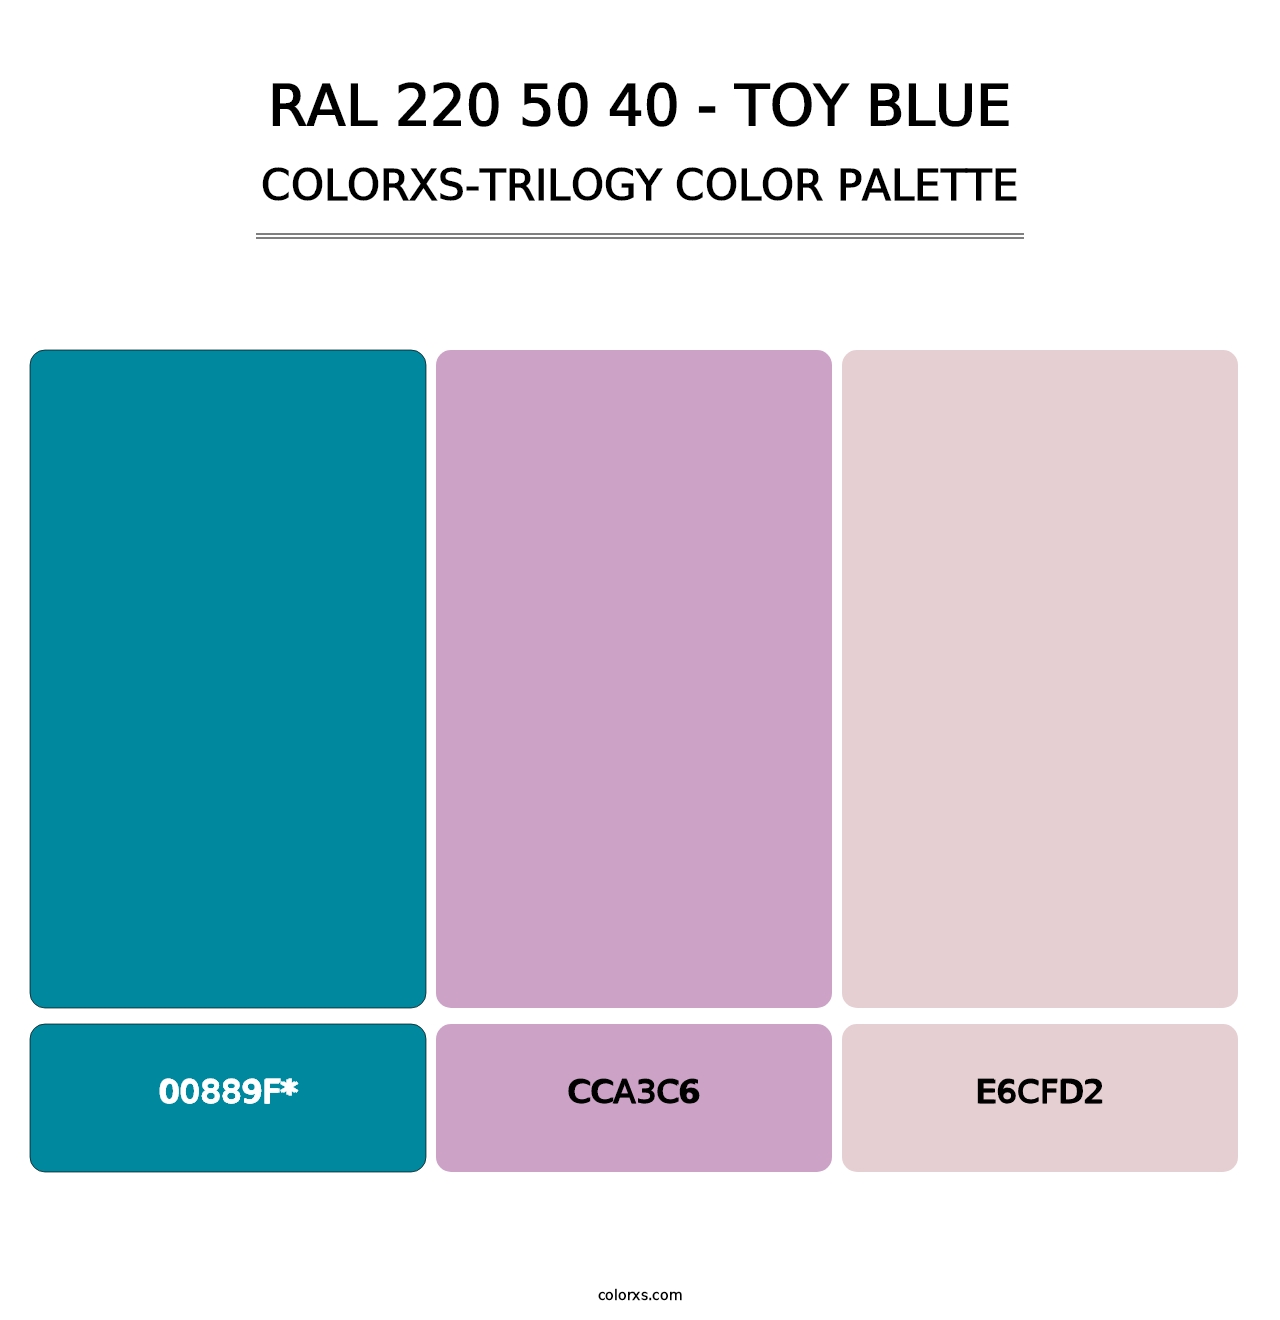 RAL 220 50 40 - Toy Blue - Colorxs Trilogy Palette